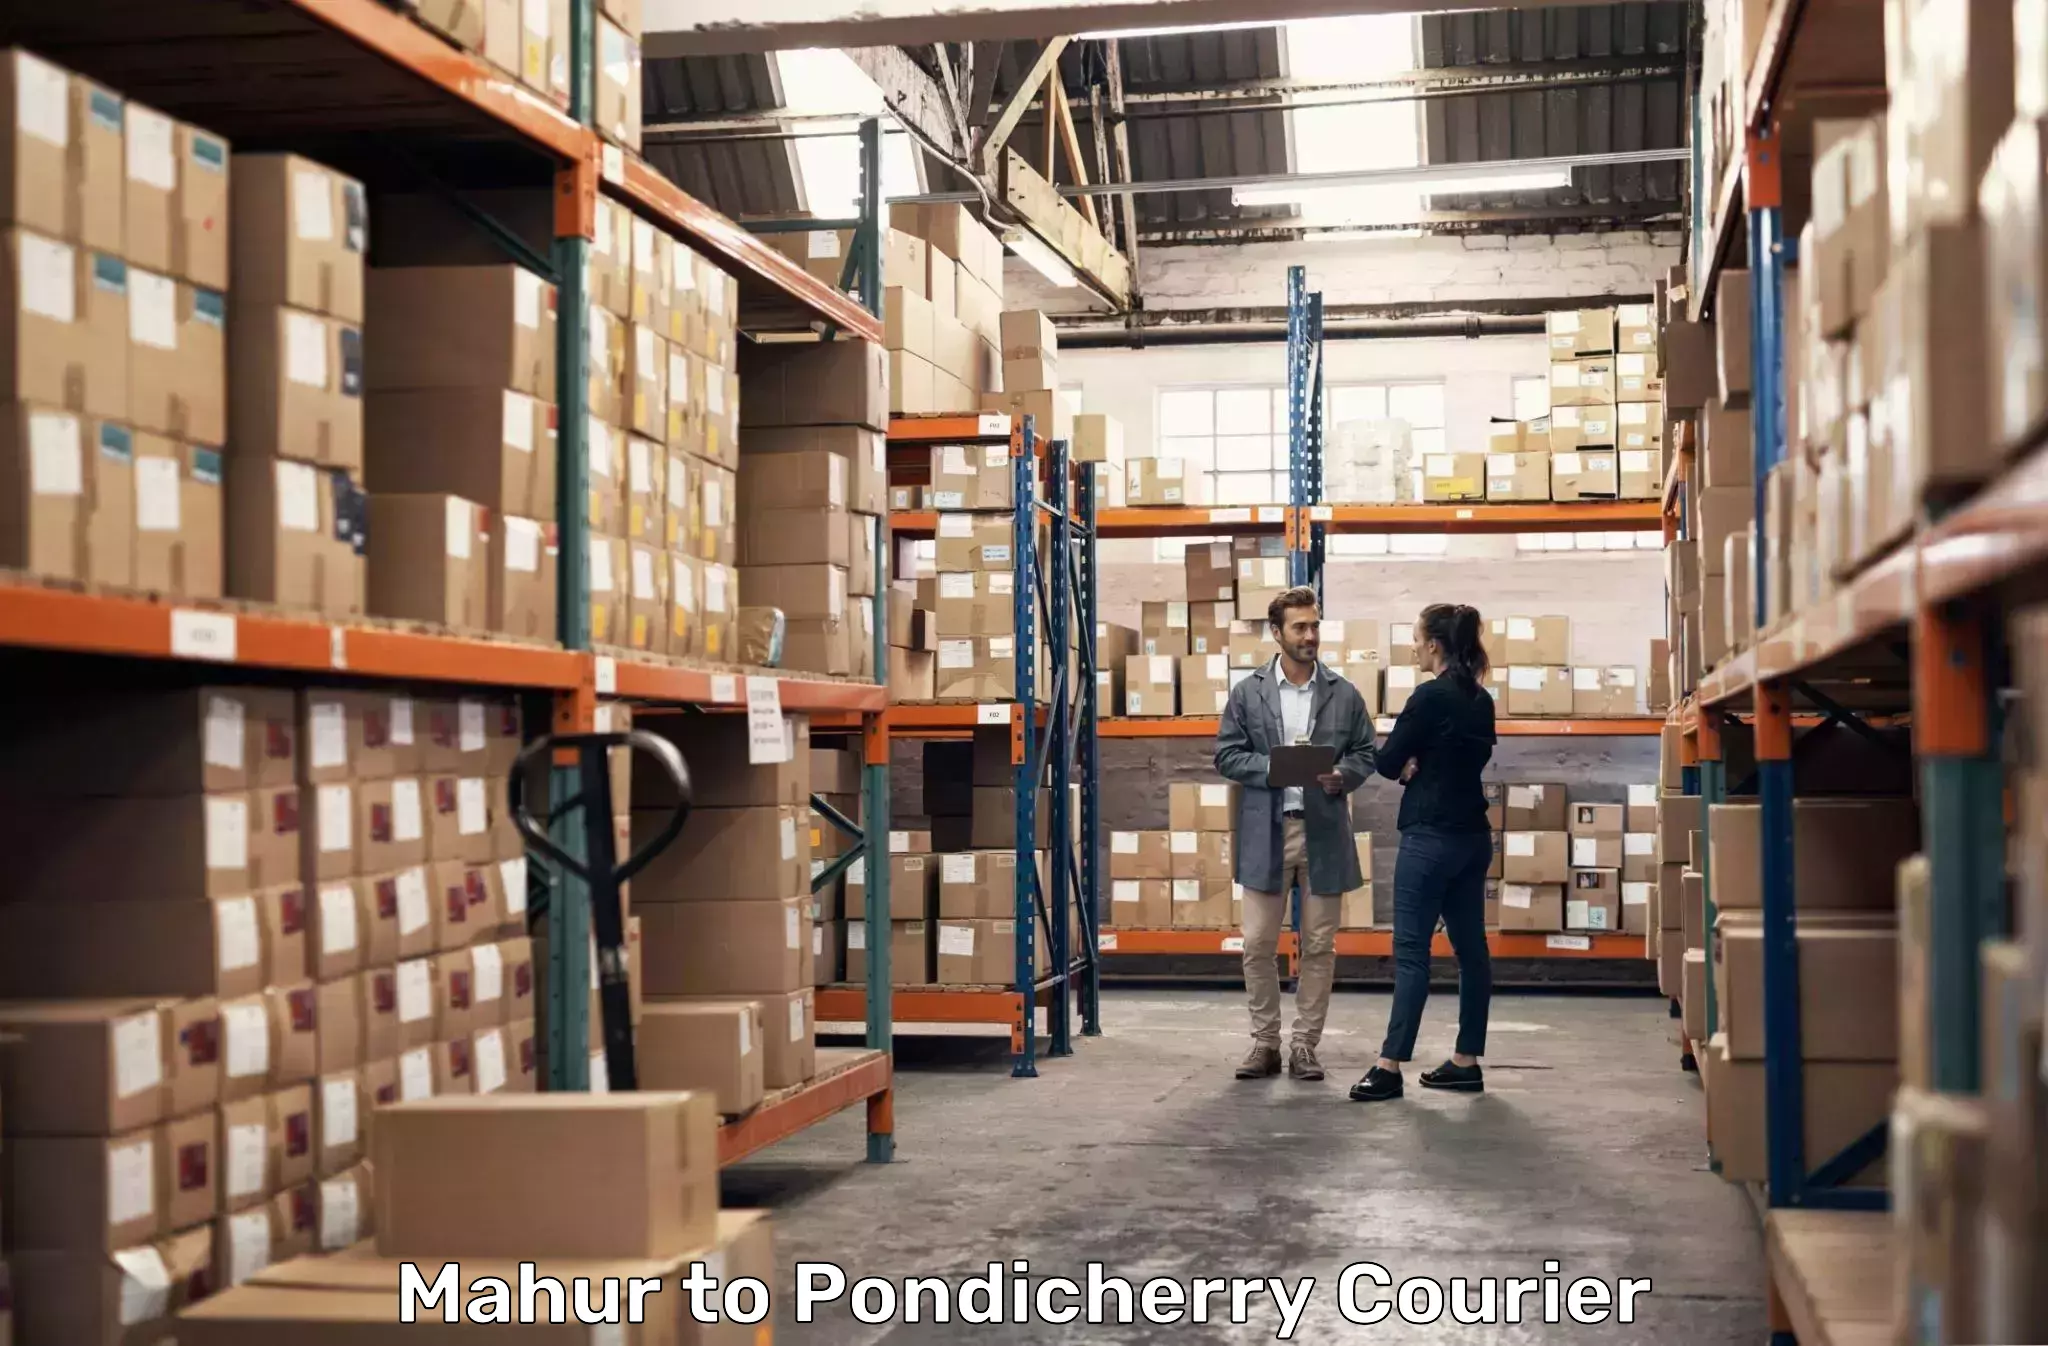 Global logistics network Mahur to Pondicherry